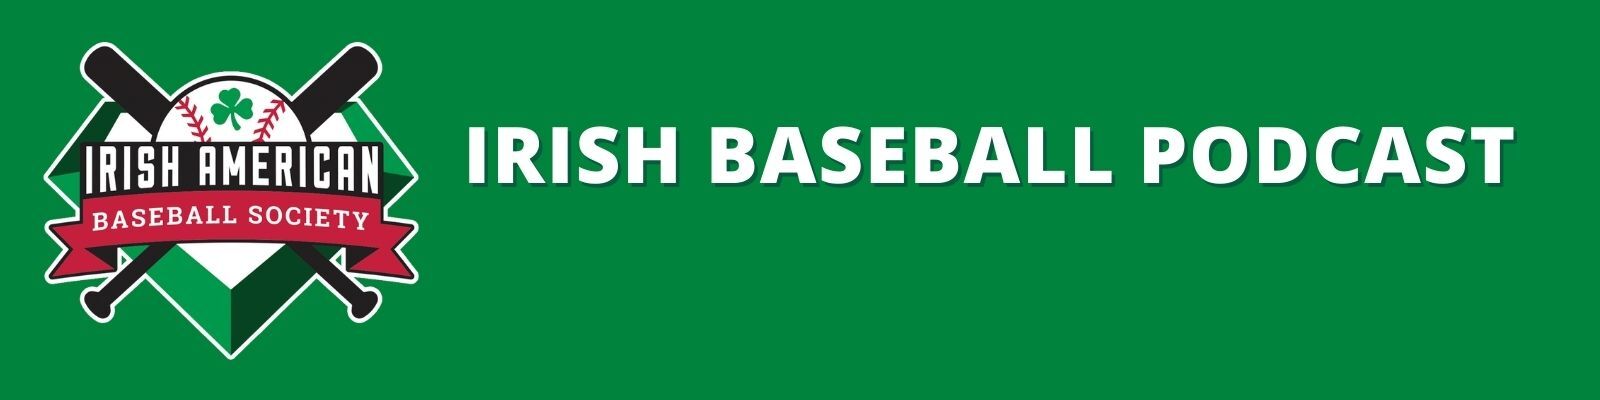 Irish Baseball Podcast